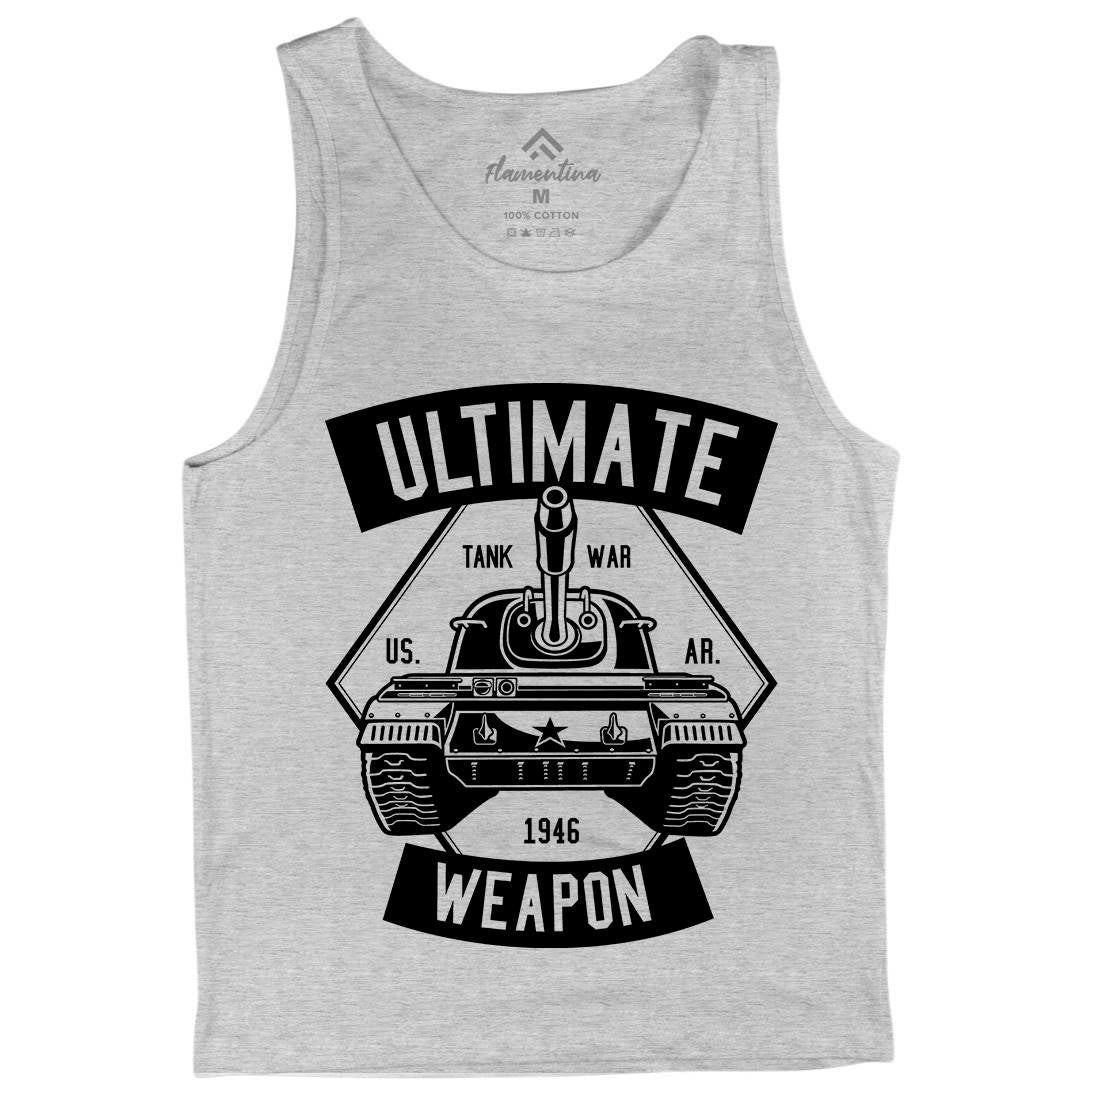 Tank War Ultimate Weapon Mens Tank Top Vest Army B649